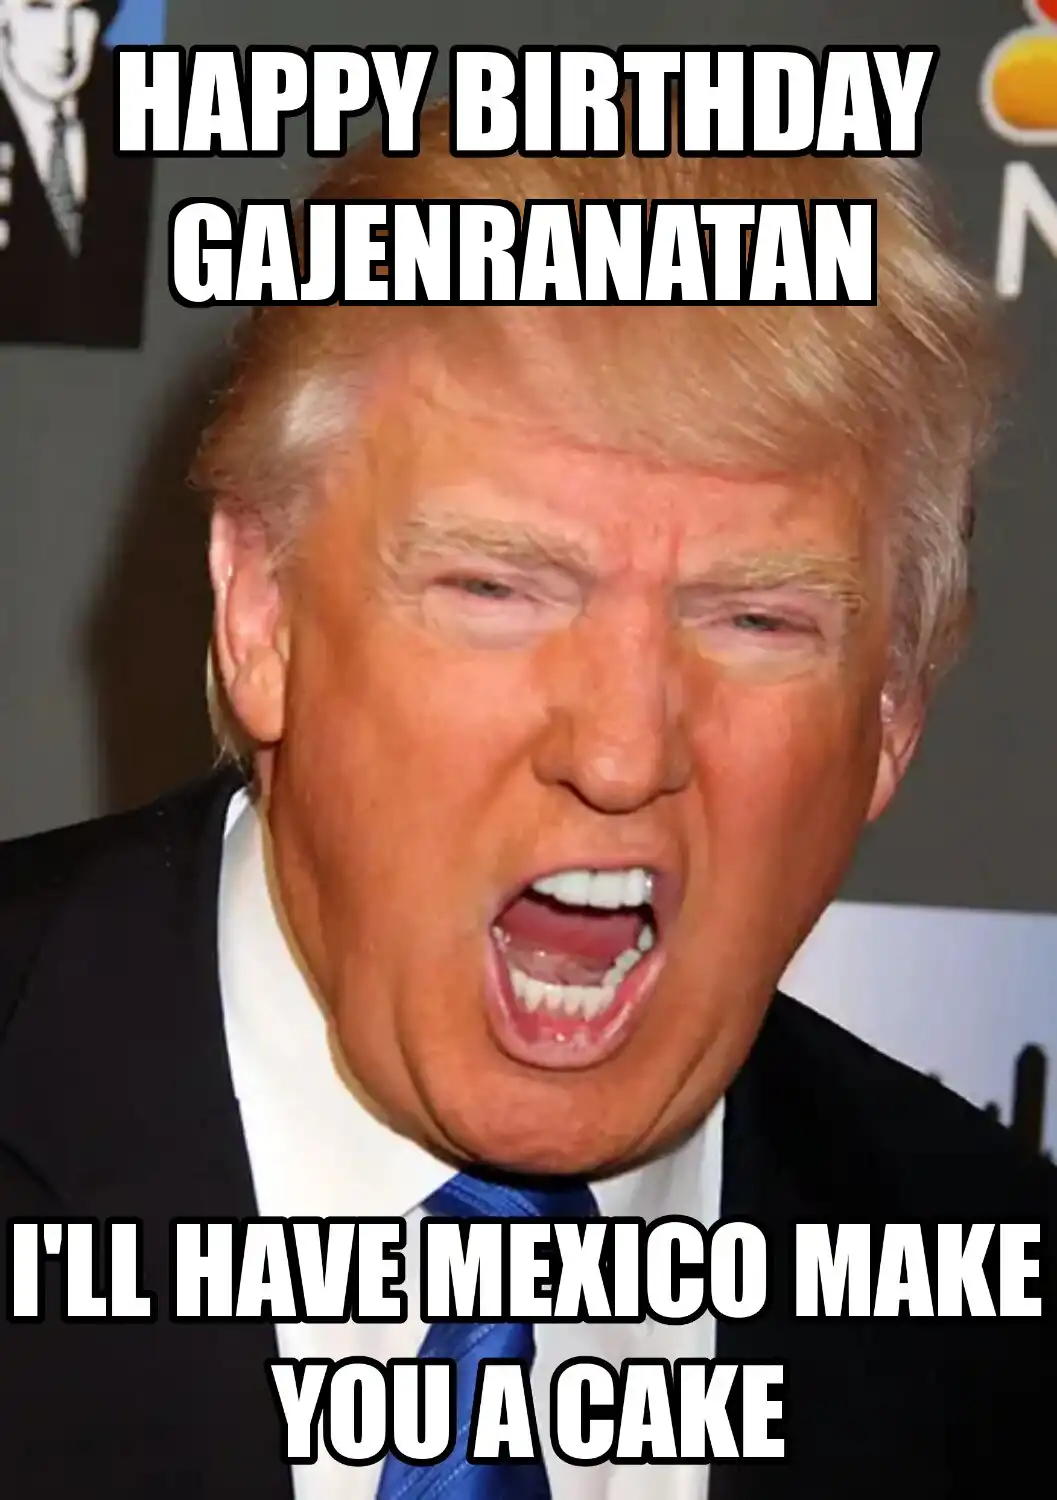 Happy Birthday Gajenranatan Mexico Make You A Cake Meme